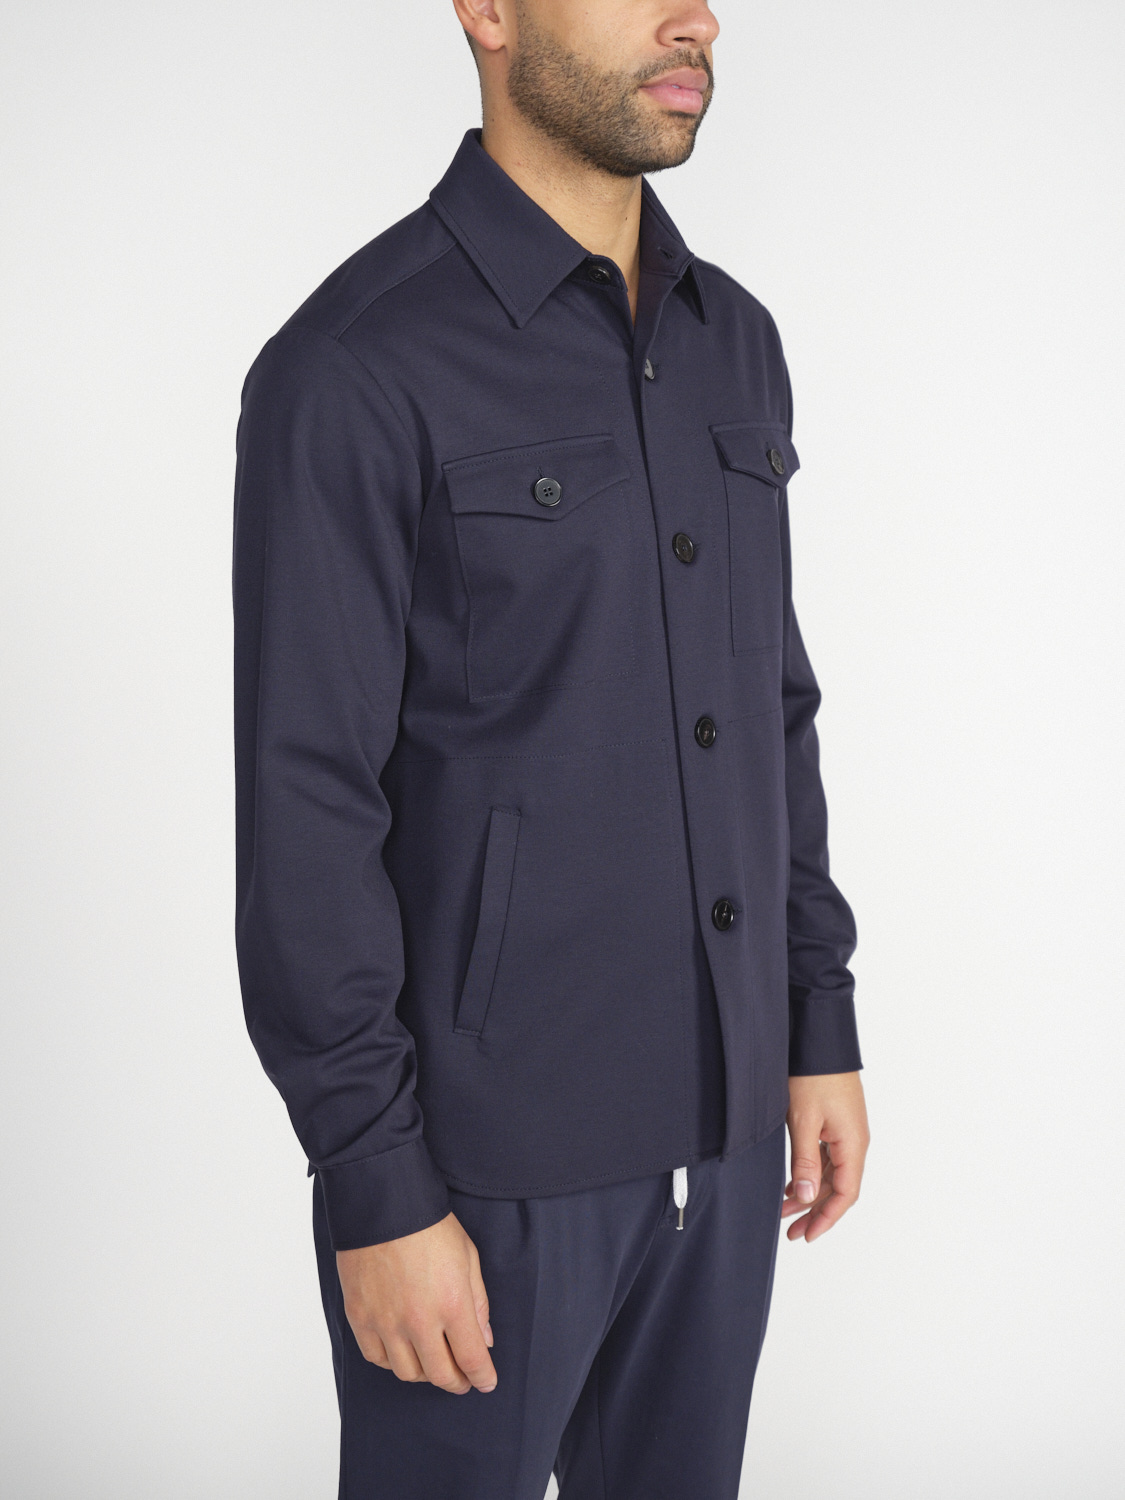 Harris Wharf London Techno viscose - Stretchy shirt jacket made from tech fabric  marine 52